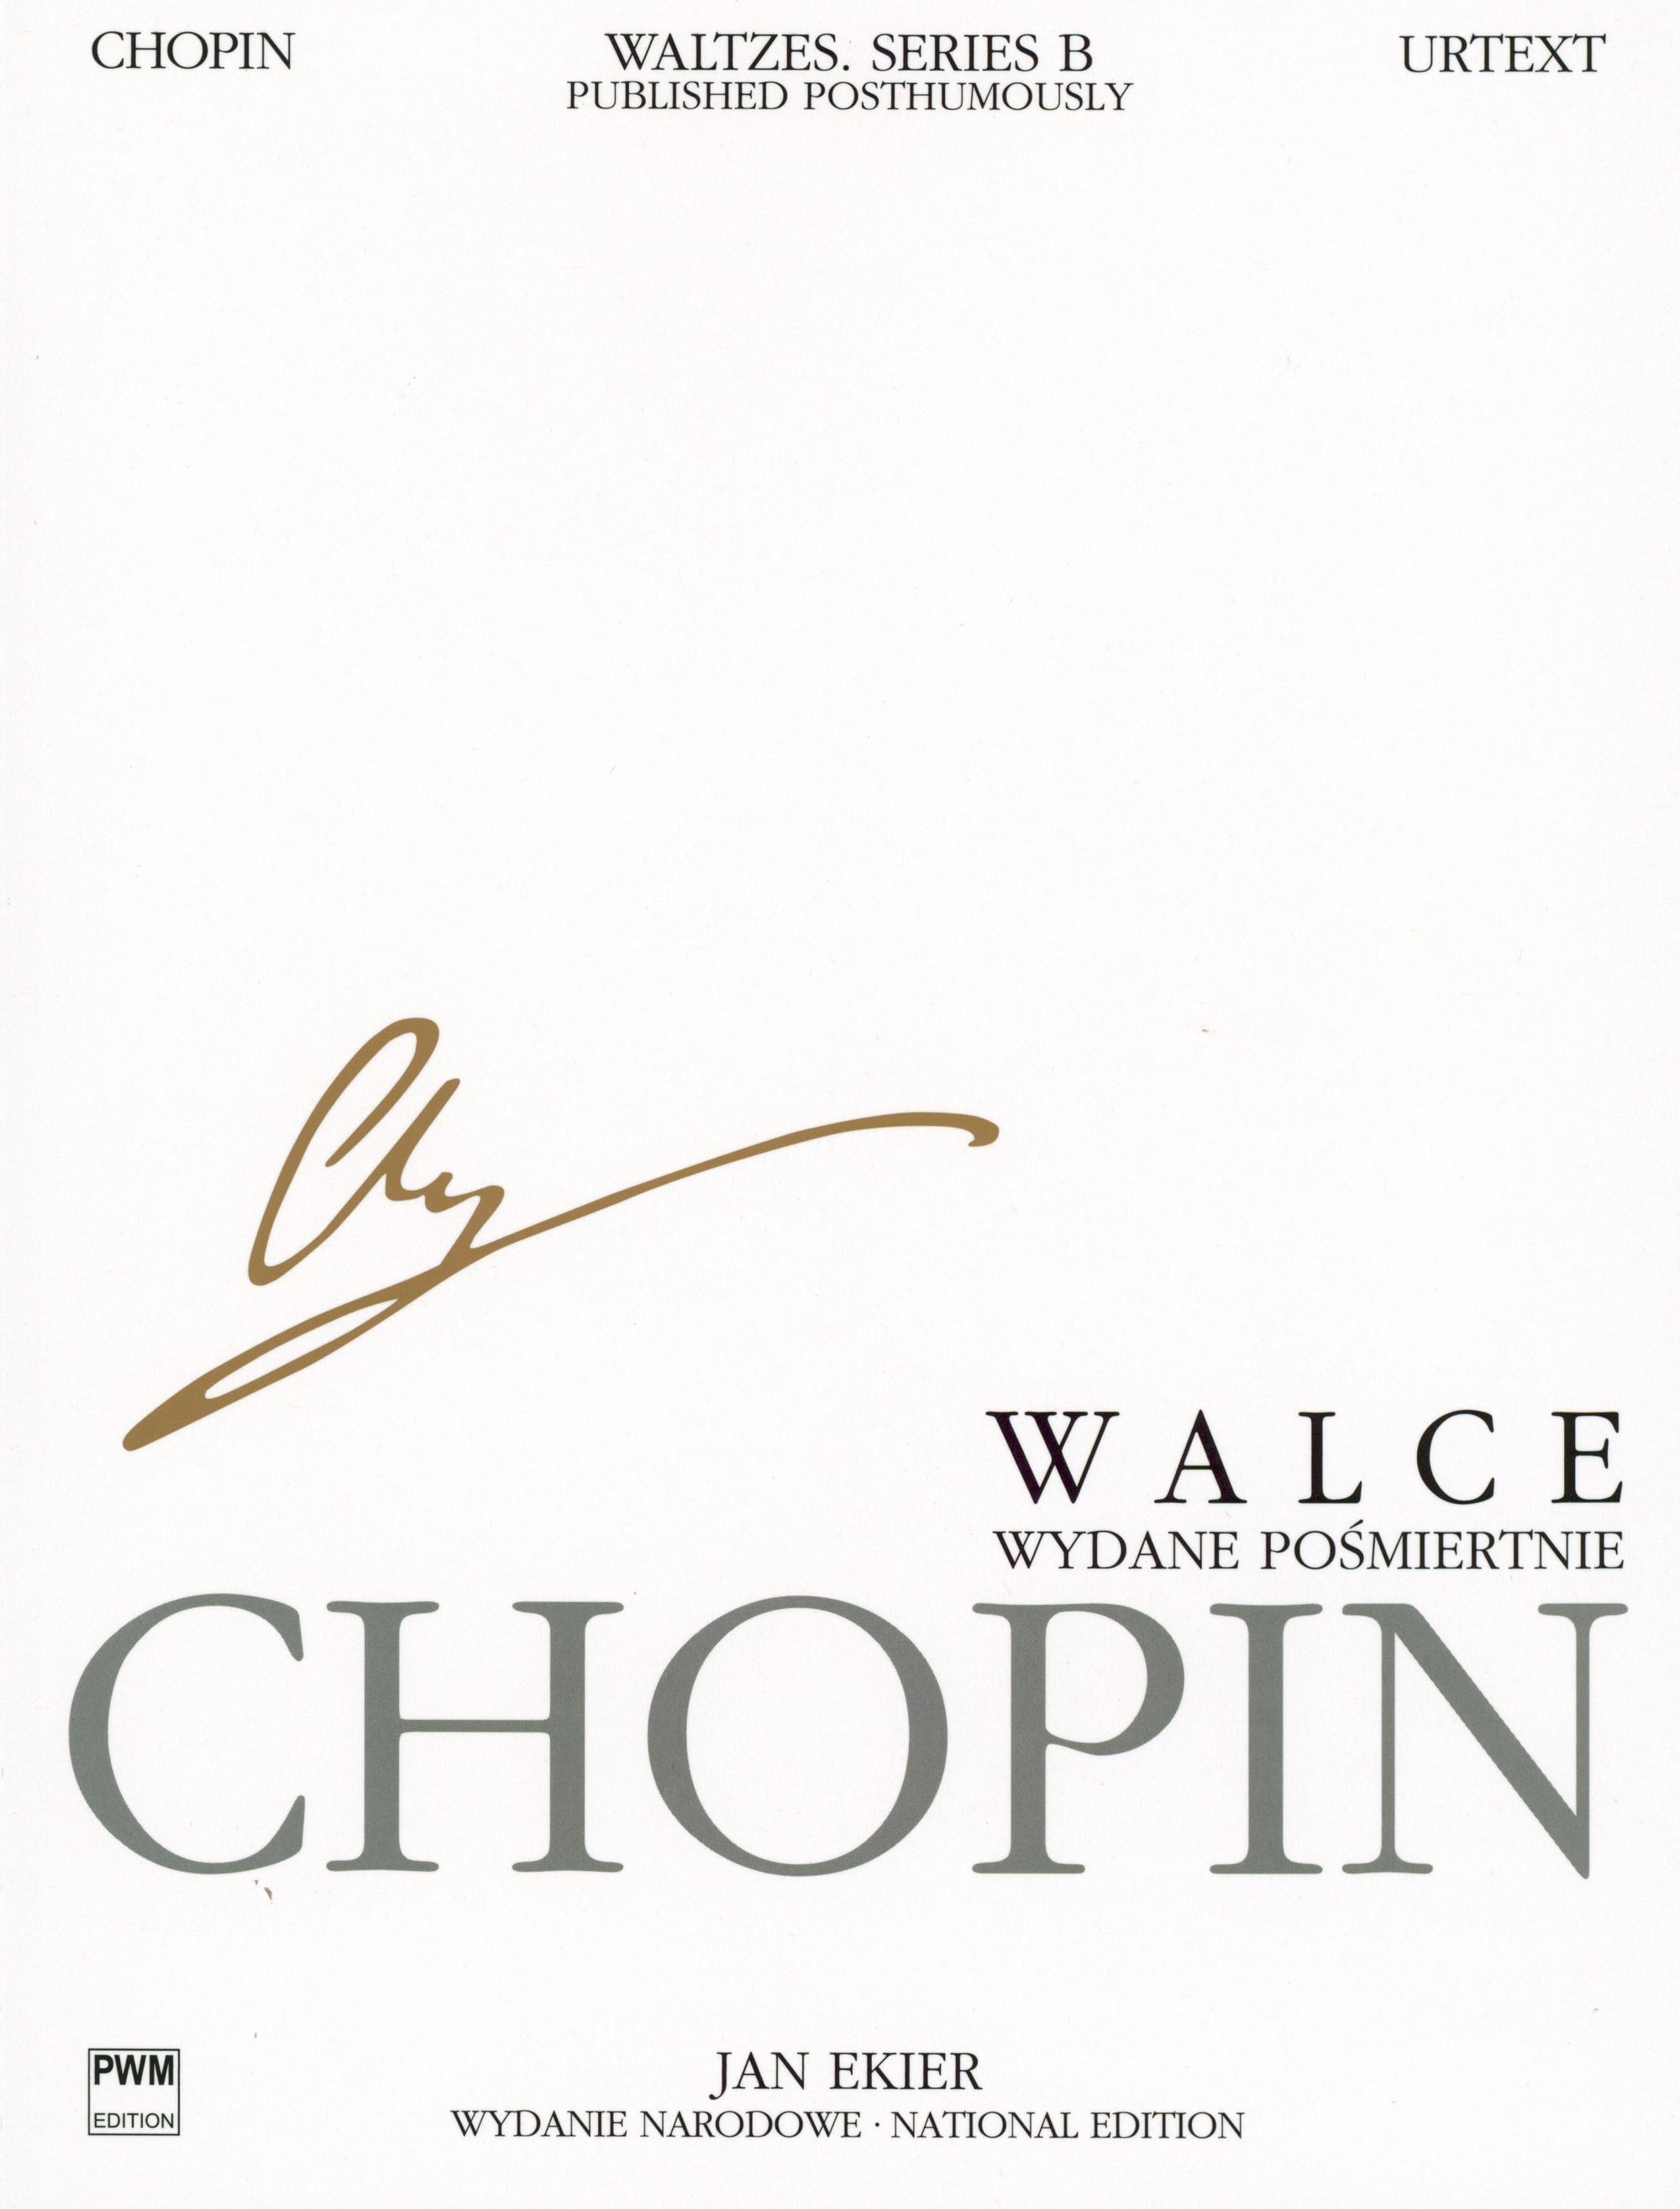 Chopin: Waltzes - Series B